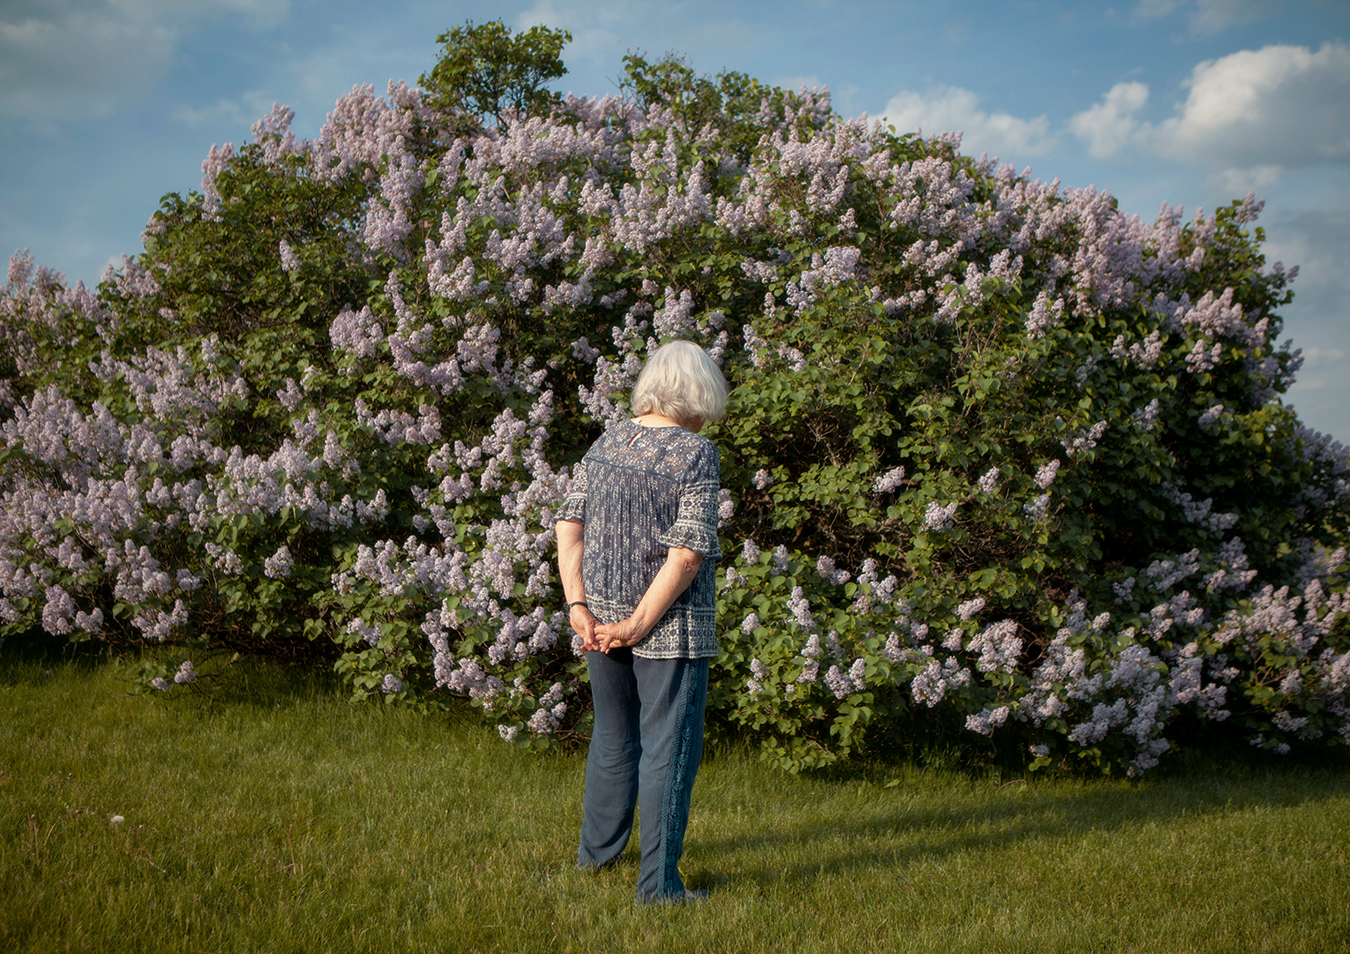     Angela Lewis, Woman and the Hydrangea Bush, 2022

